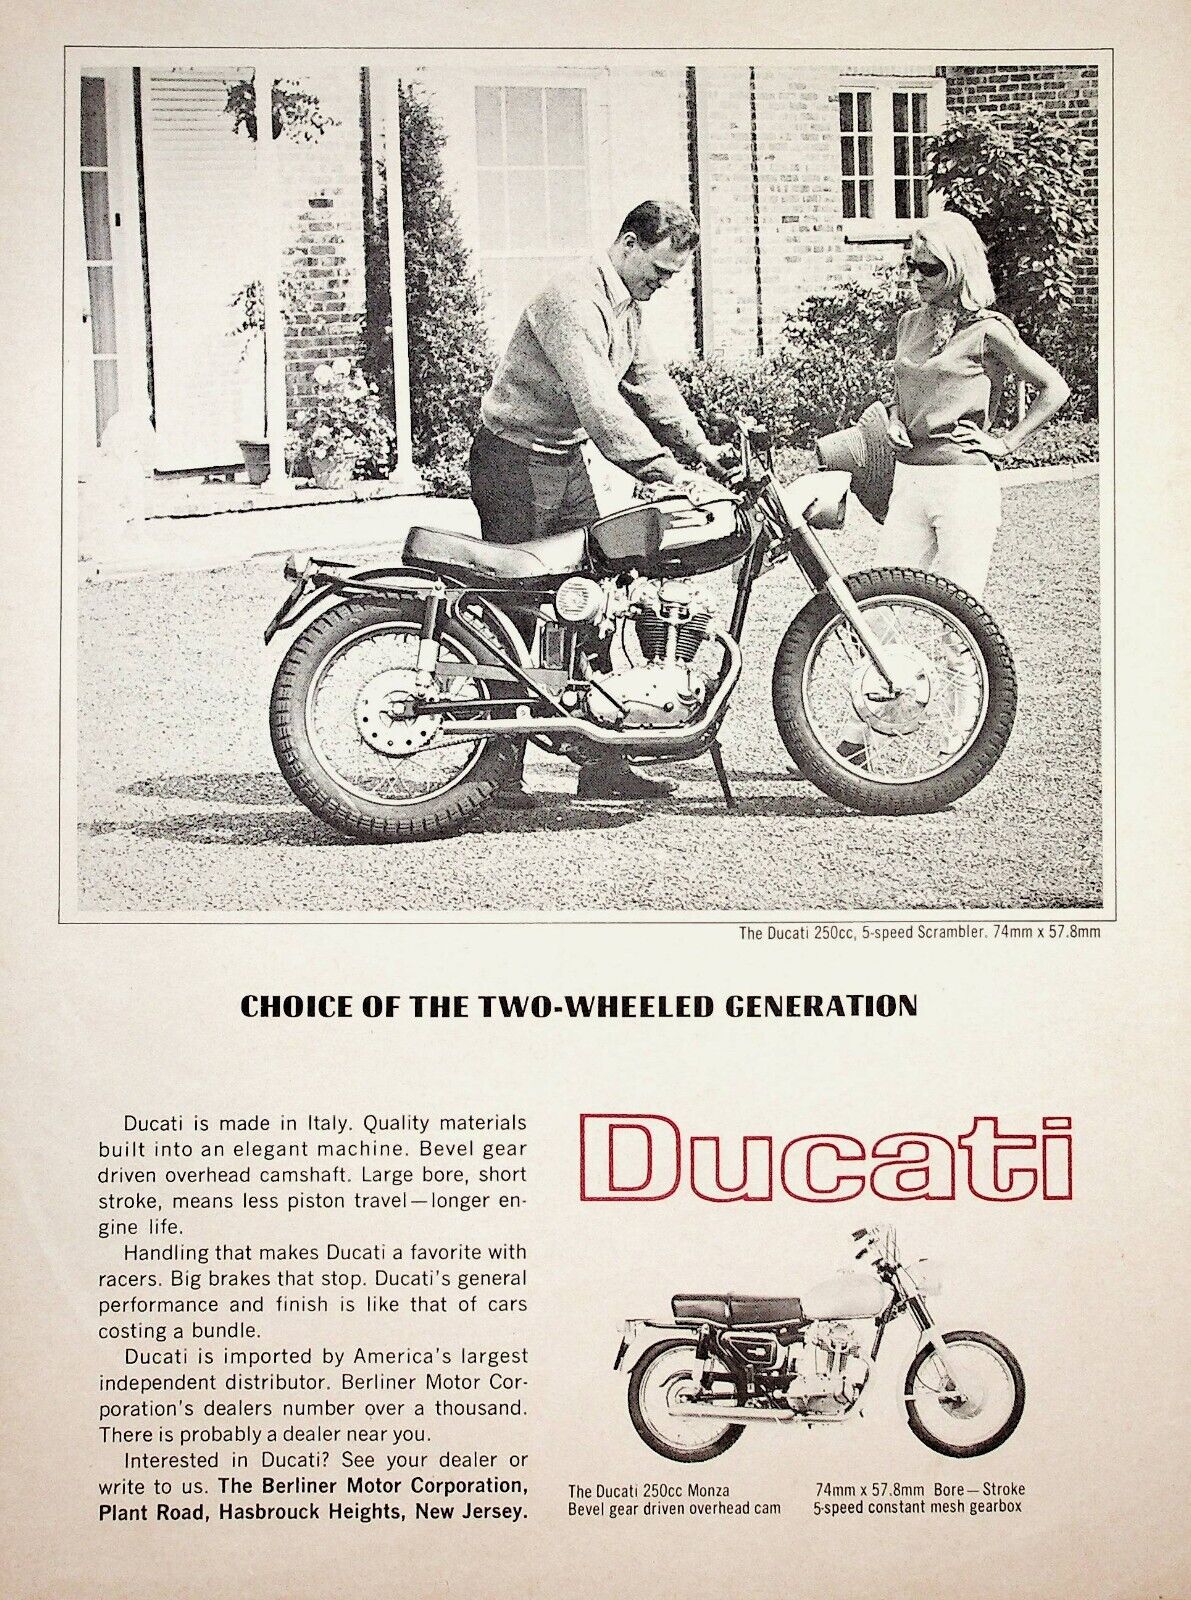 1965 Ducati 250cc 5-speed Scrambler - Vintage Motorcycle Ad 